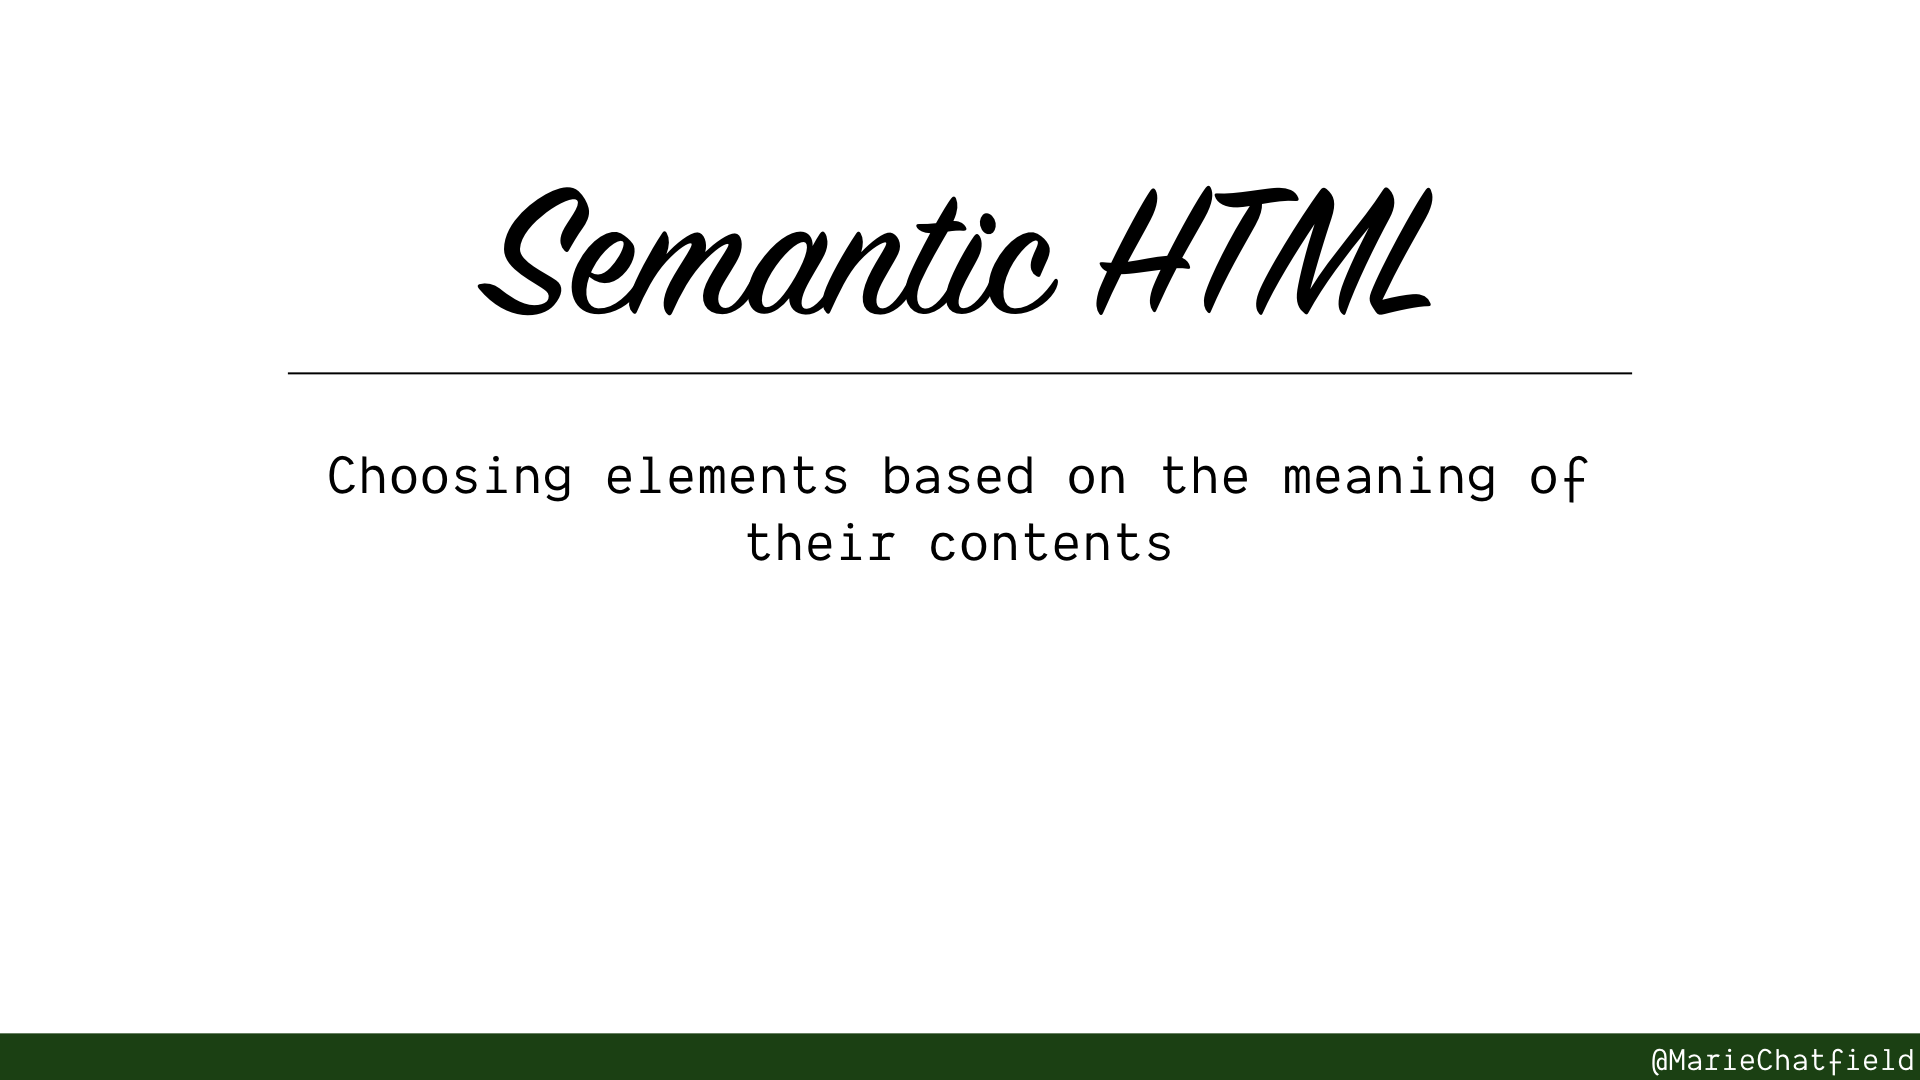 Semantic HTML definition